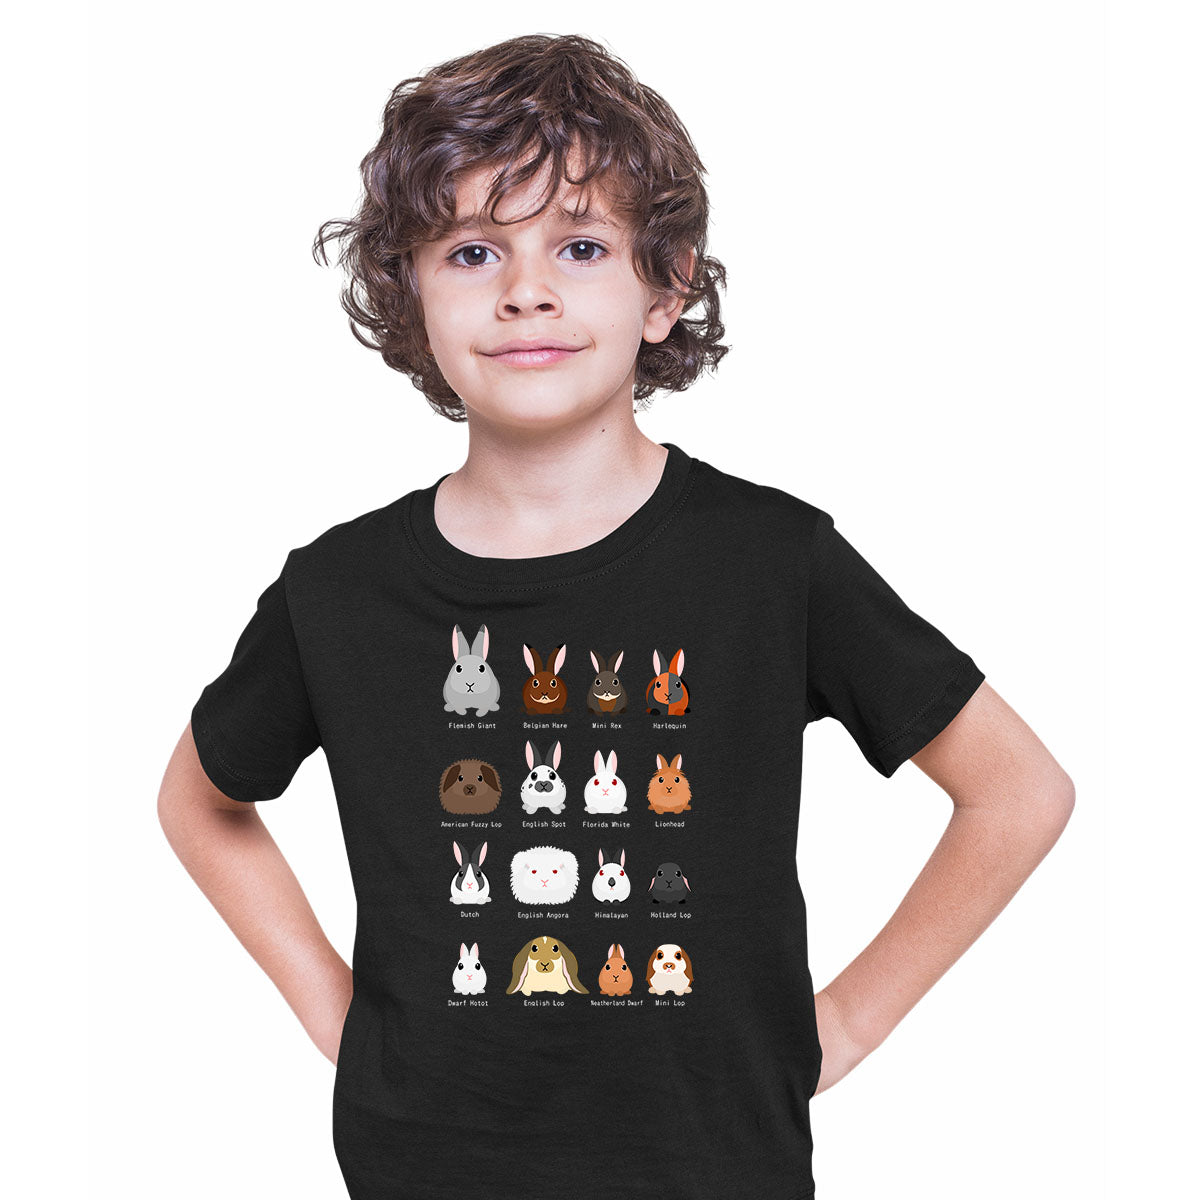 Rabbits breeds chart Typography T-shirt for Kids - Kuzi Tees